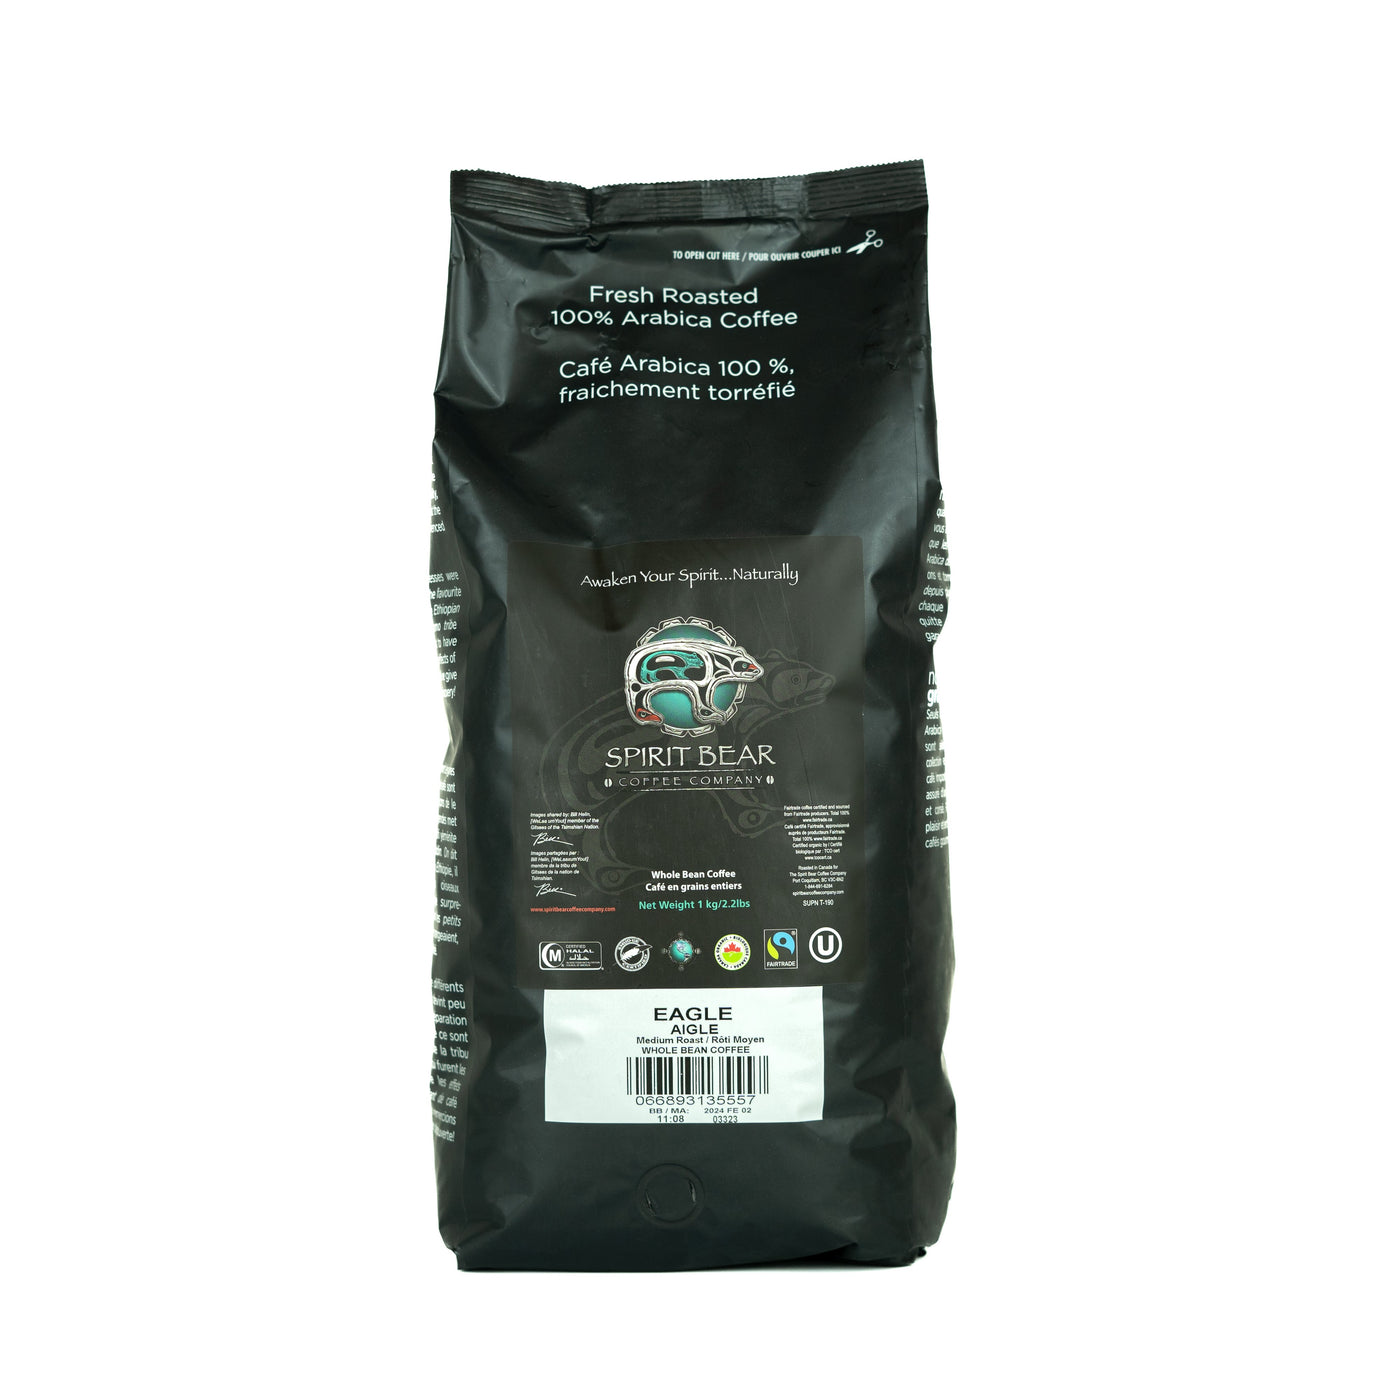 Eagle Medium Roast 1kg bag - Spirit Bear Coffee Company, Order coffee online Canada, wholesale coffee, organic and fair trade coffee